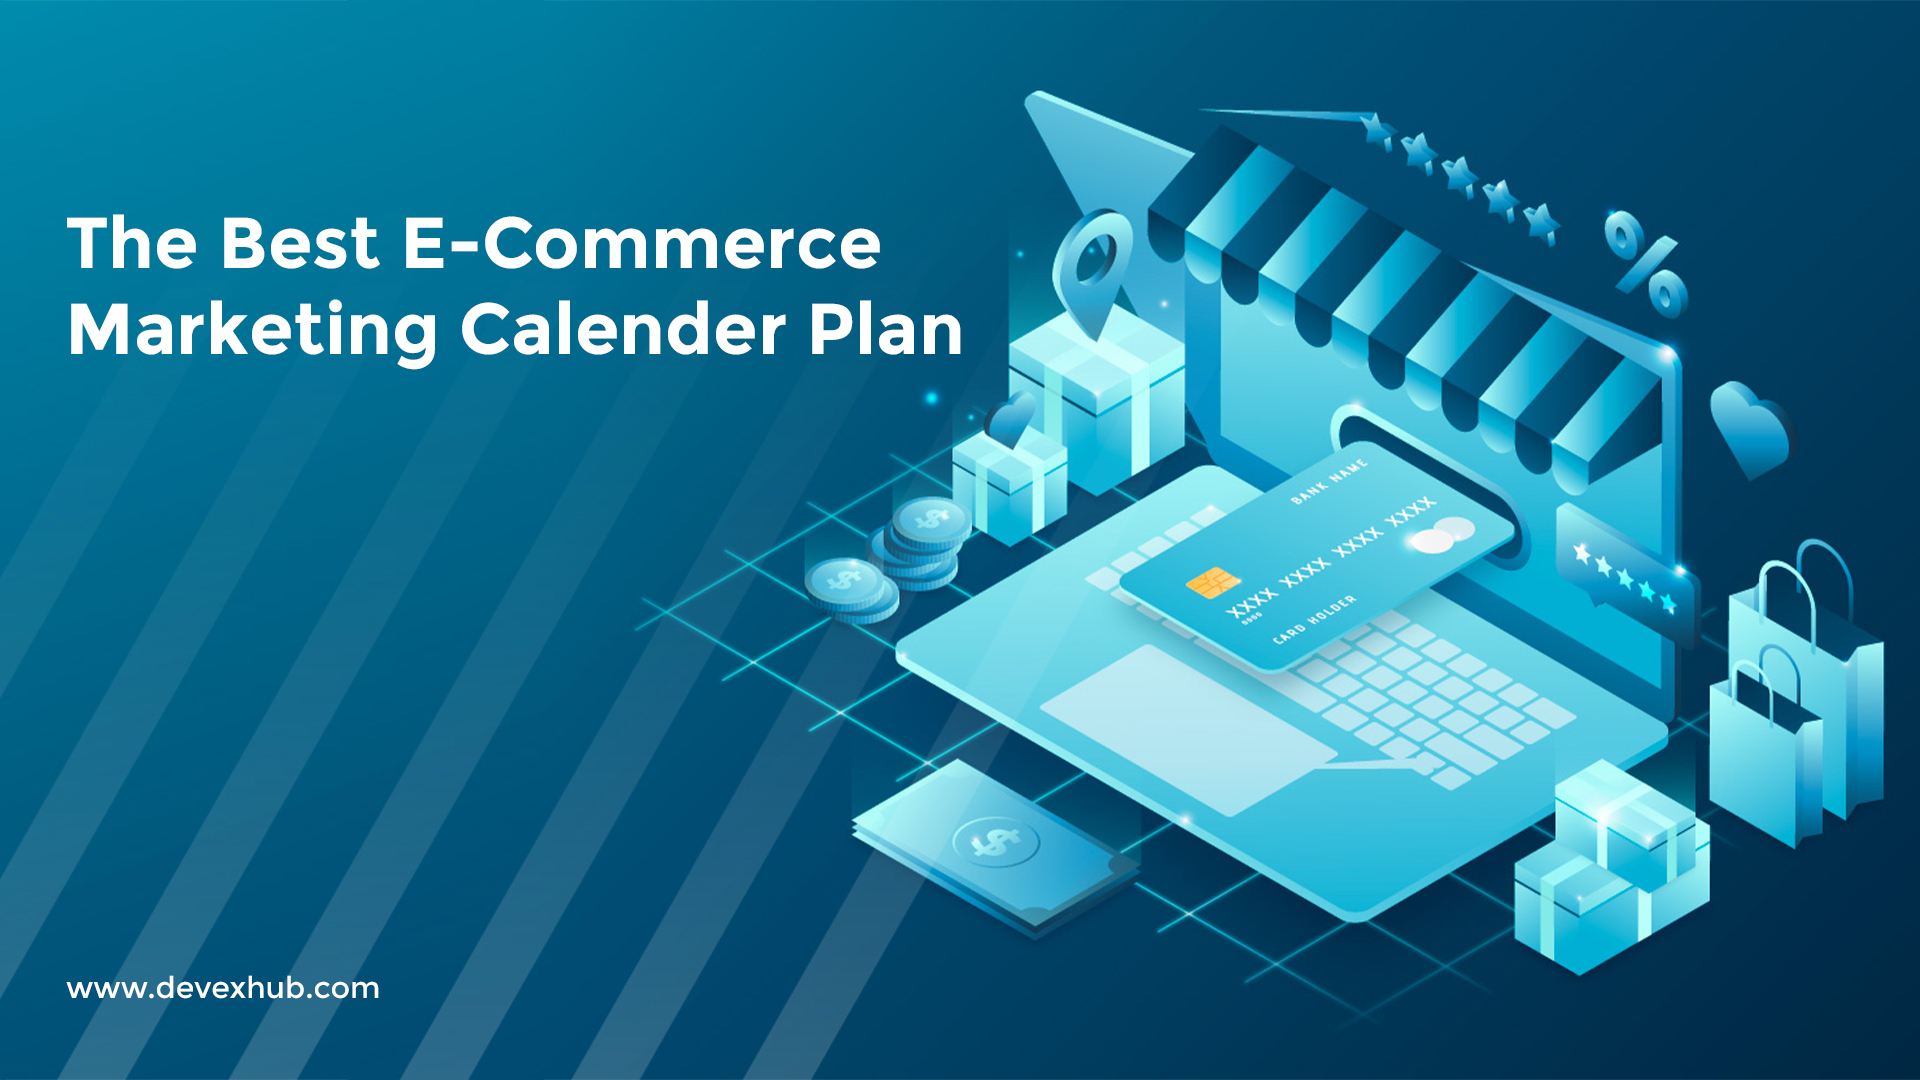 The Best E-Commerce Marketing Calendar Plan